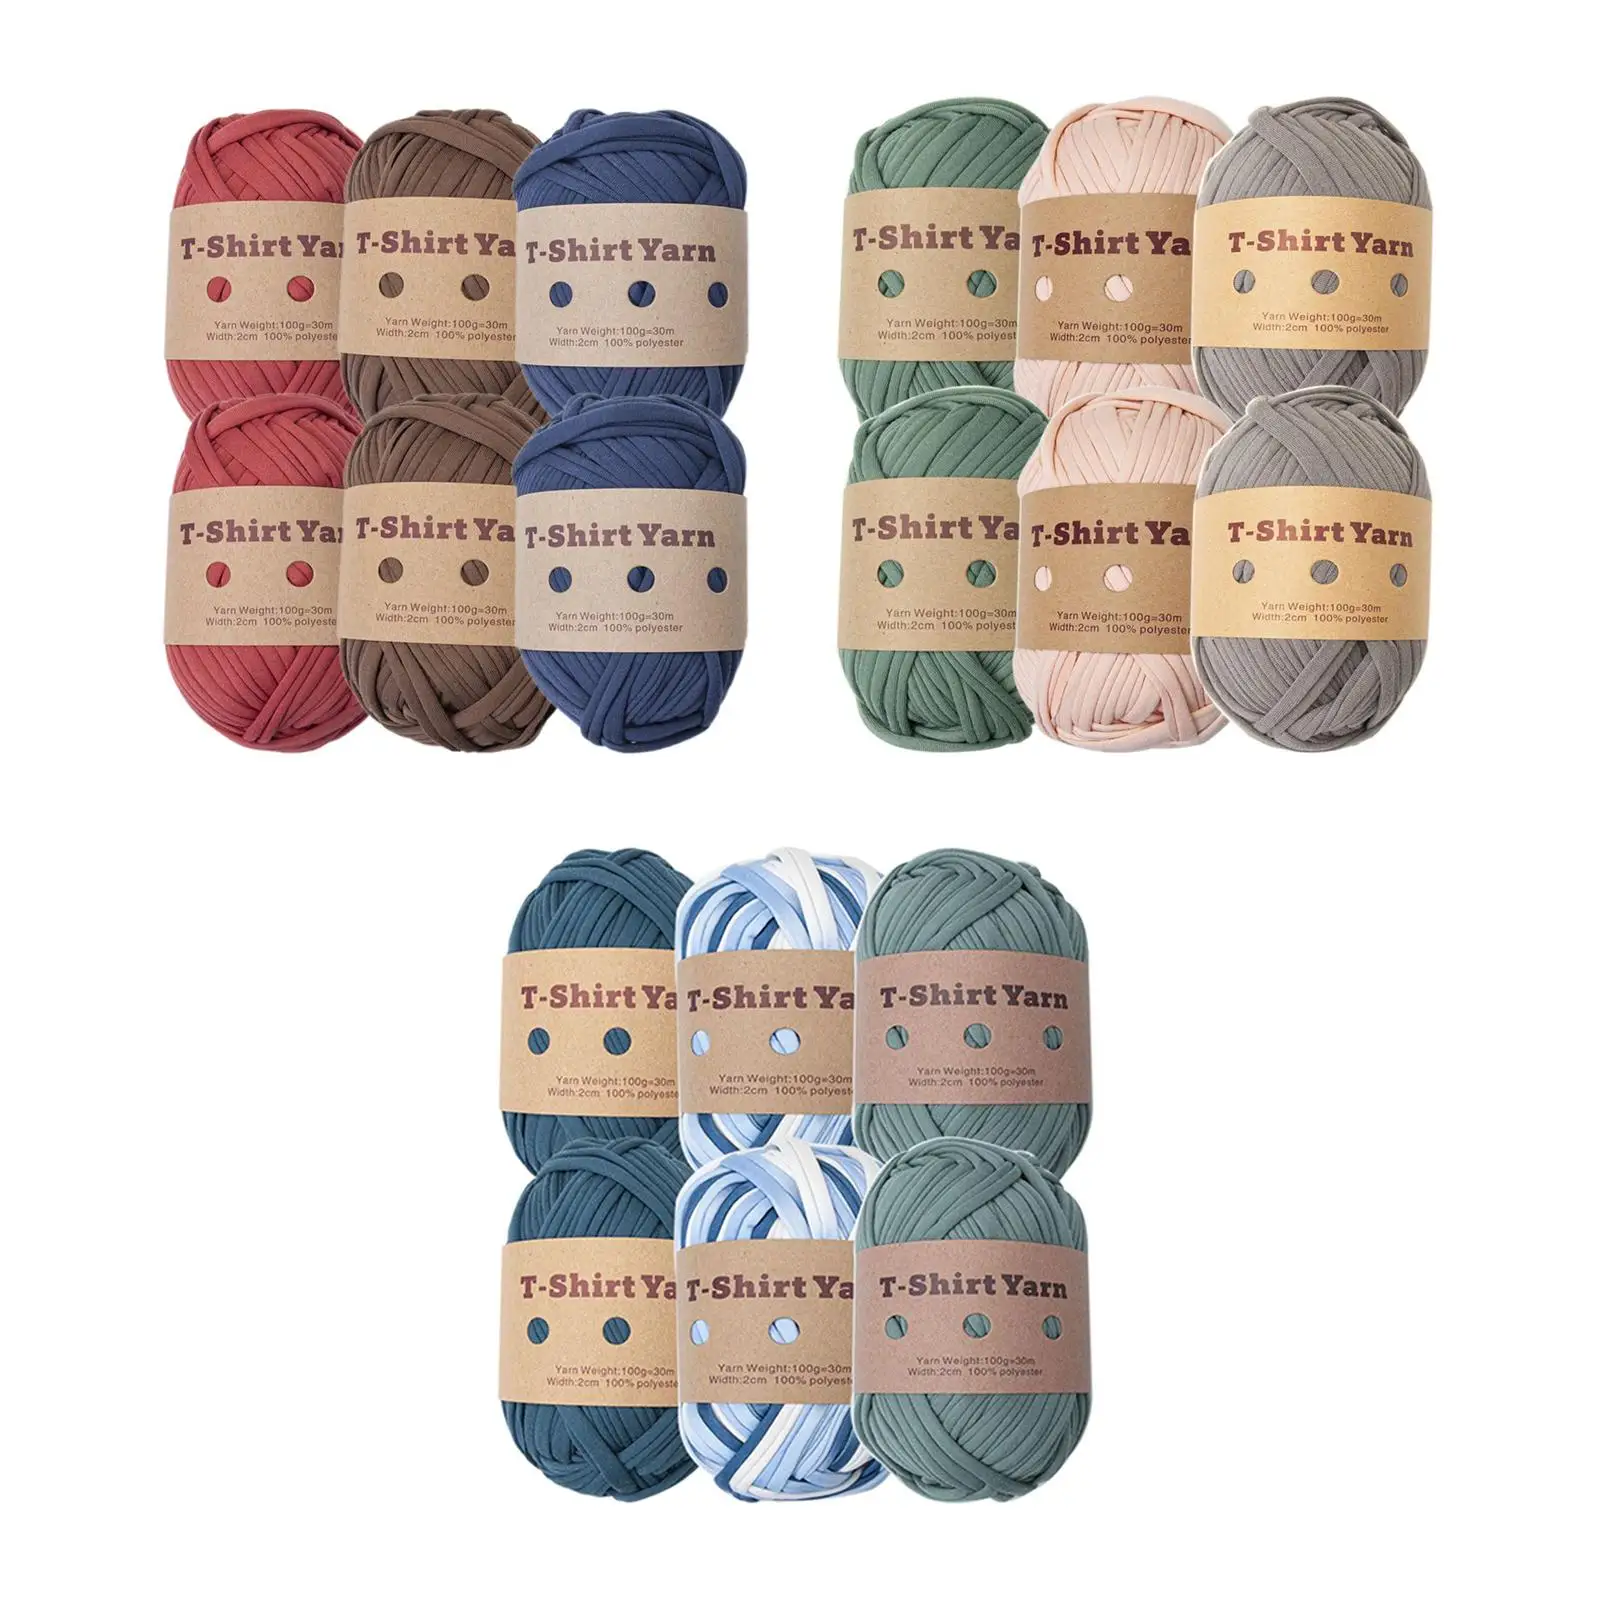 6 Pieces T Shirt Yarn Soft Bag Making Supplies for Baskets Pillow Crochet